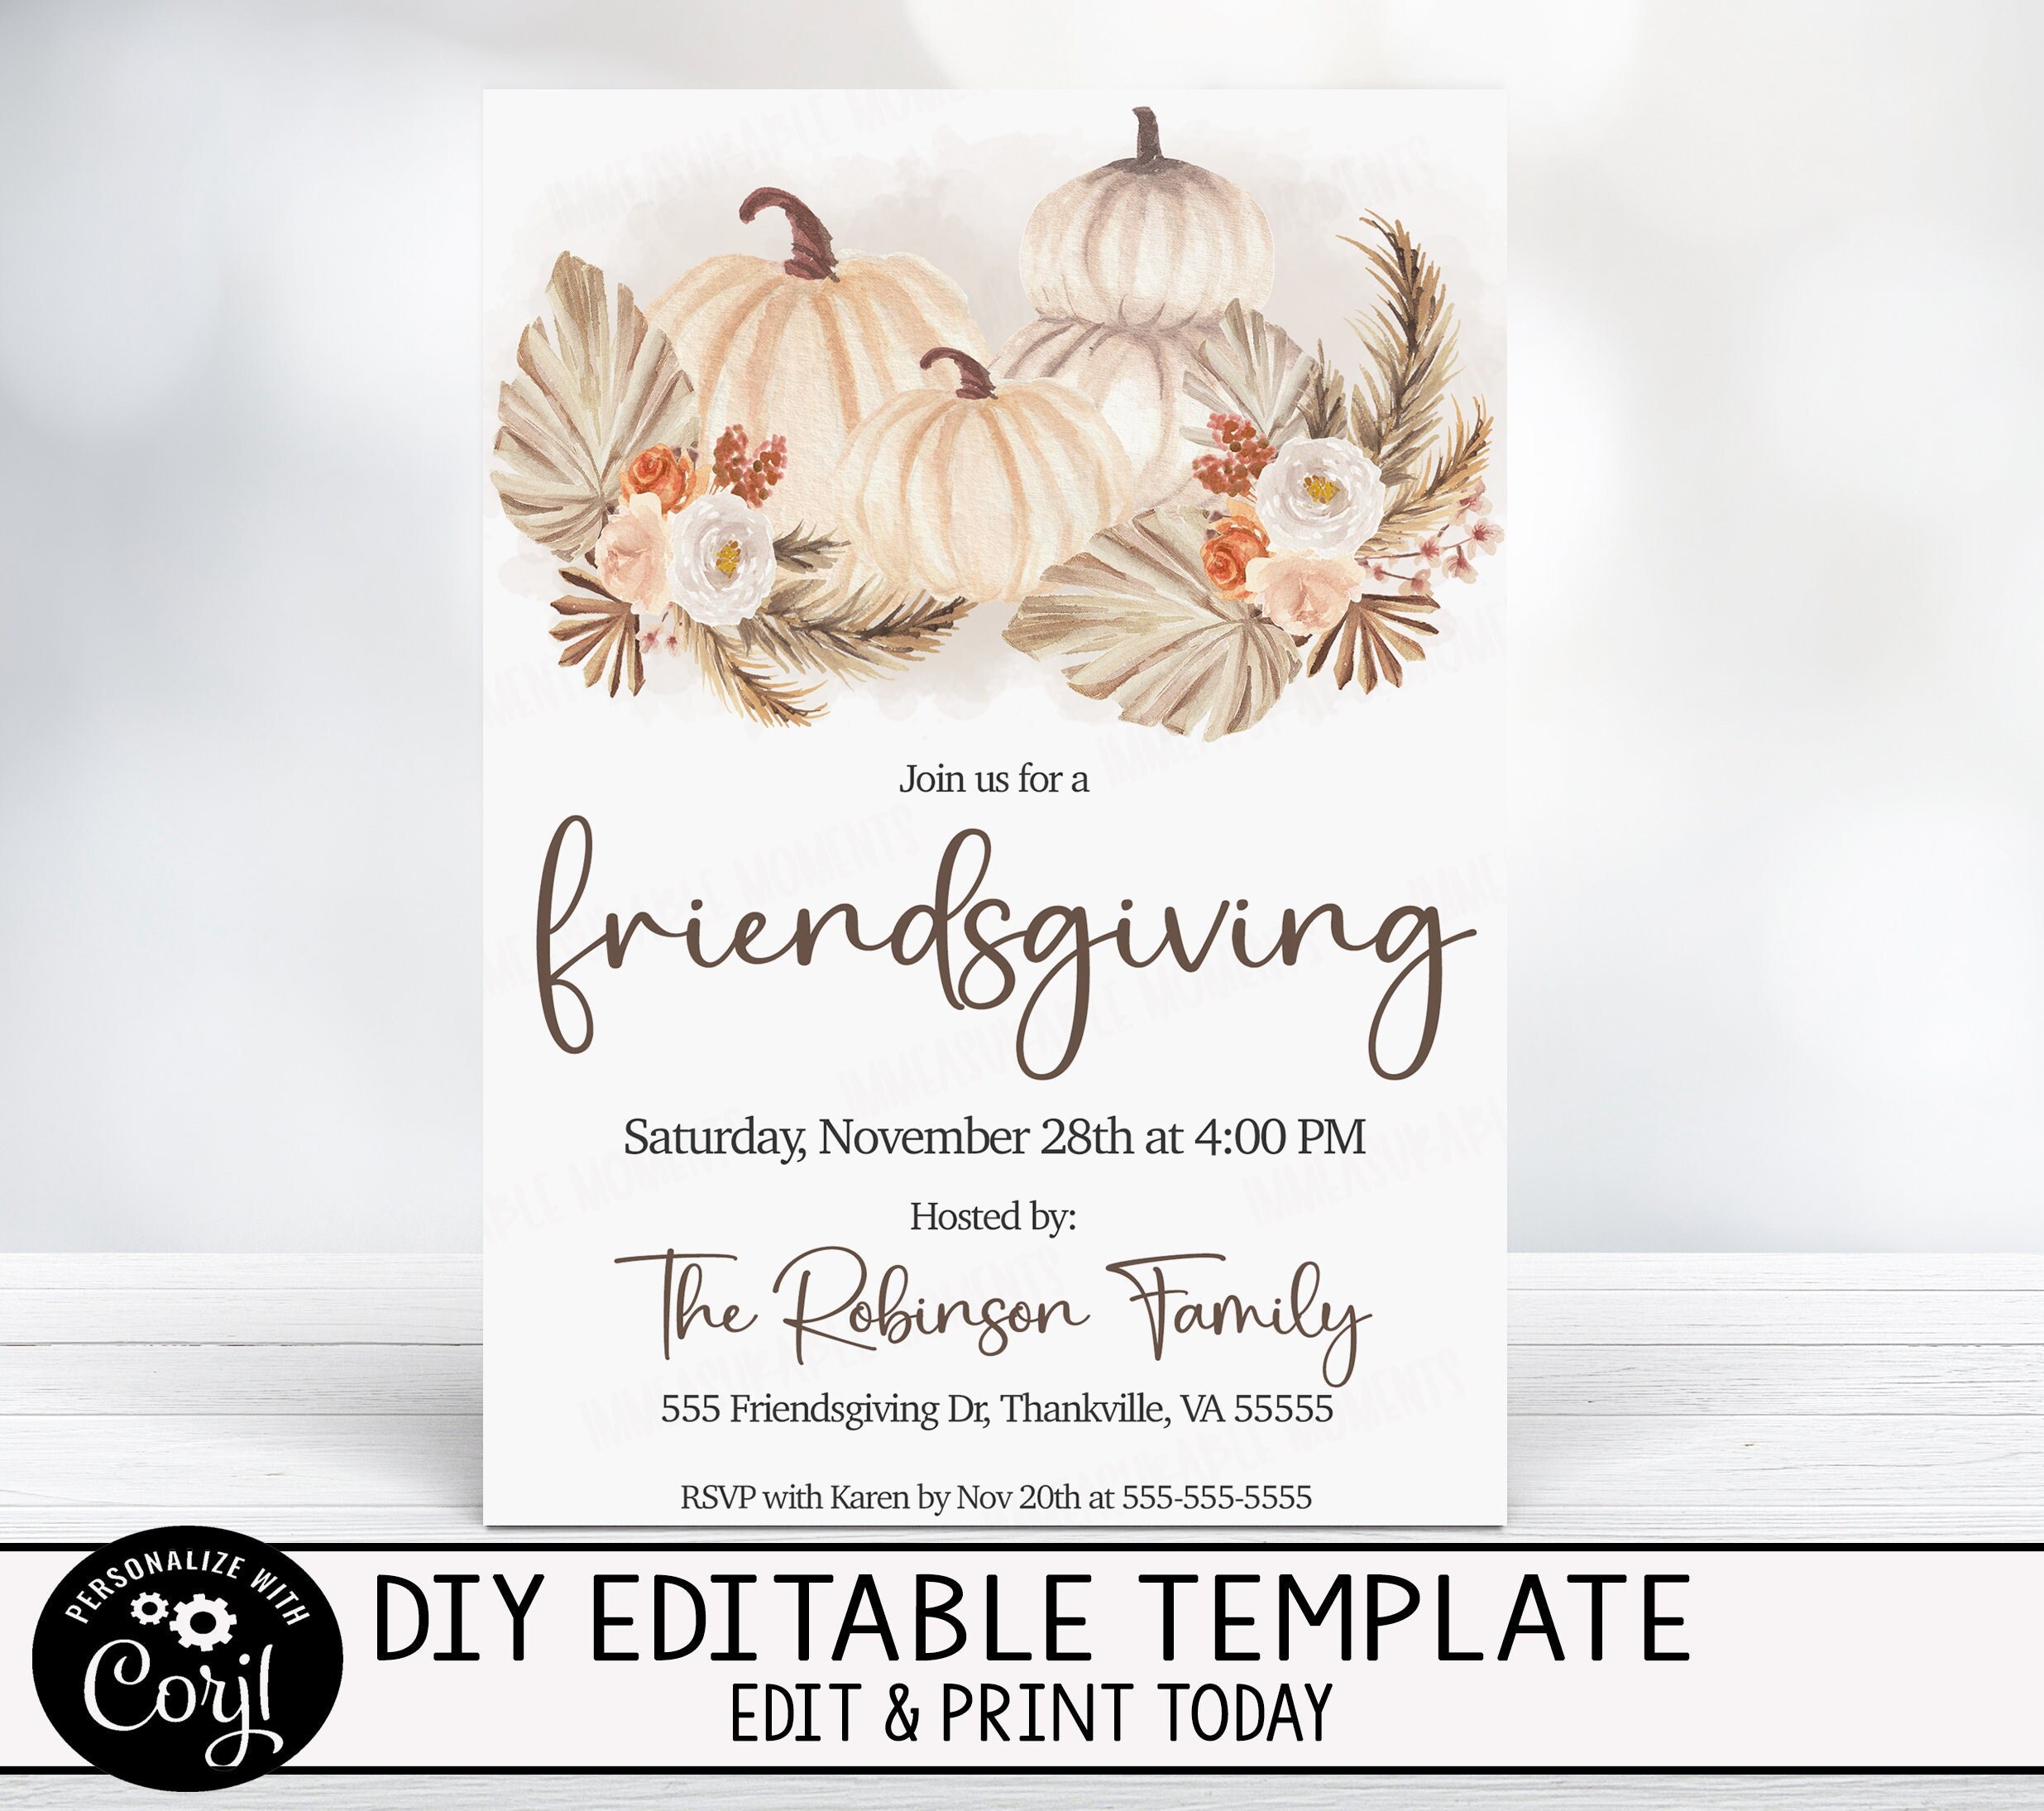 Friendsgiving / Thanksgiving Party - Easy Like Sunday Morning